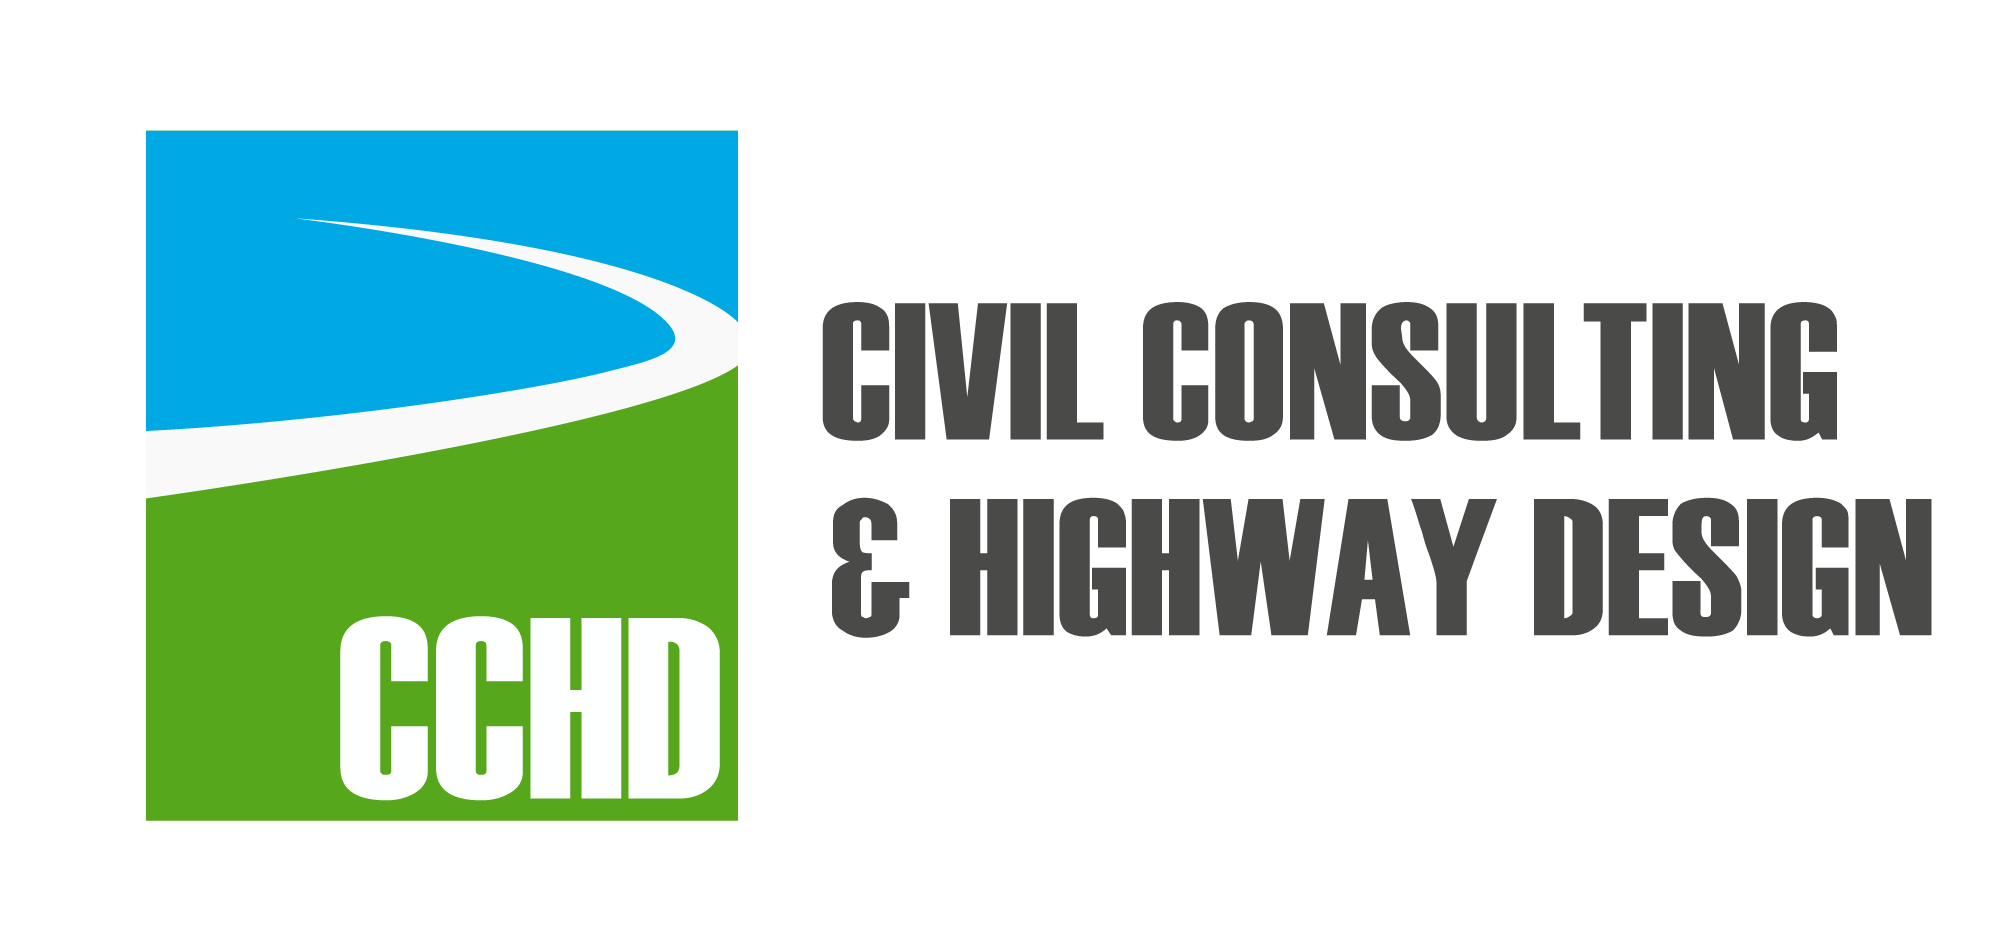 CCHD Logo - Home Pty Ltd (Civil Consulting & Highway Design)